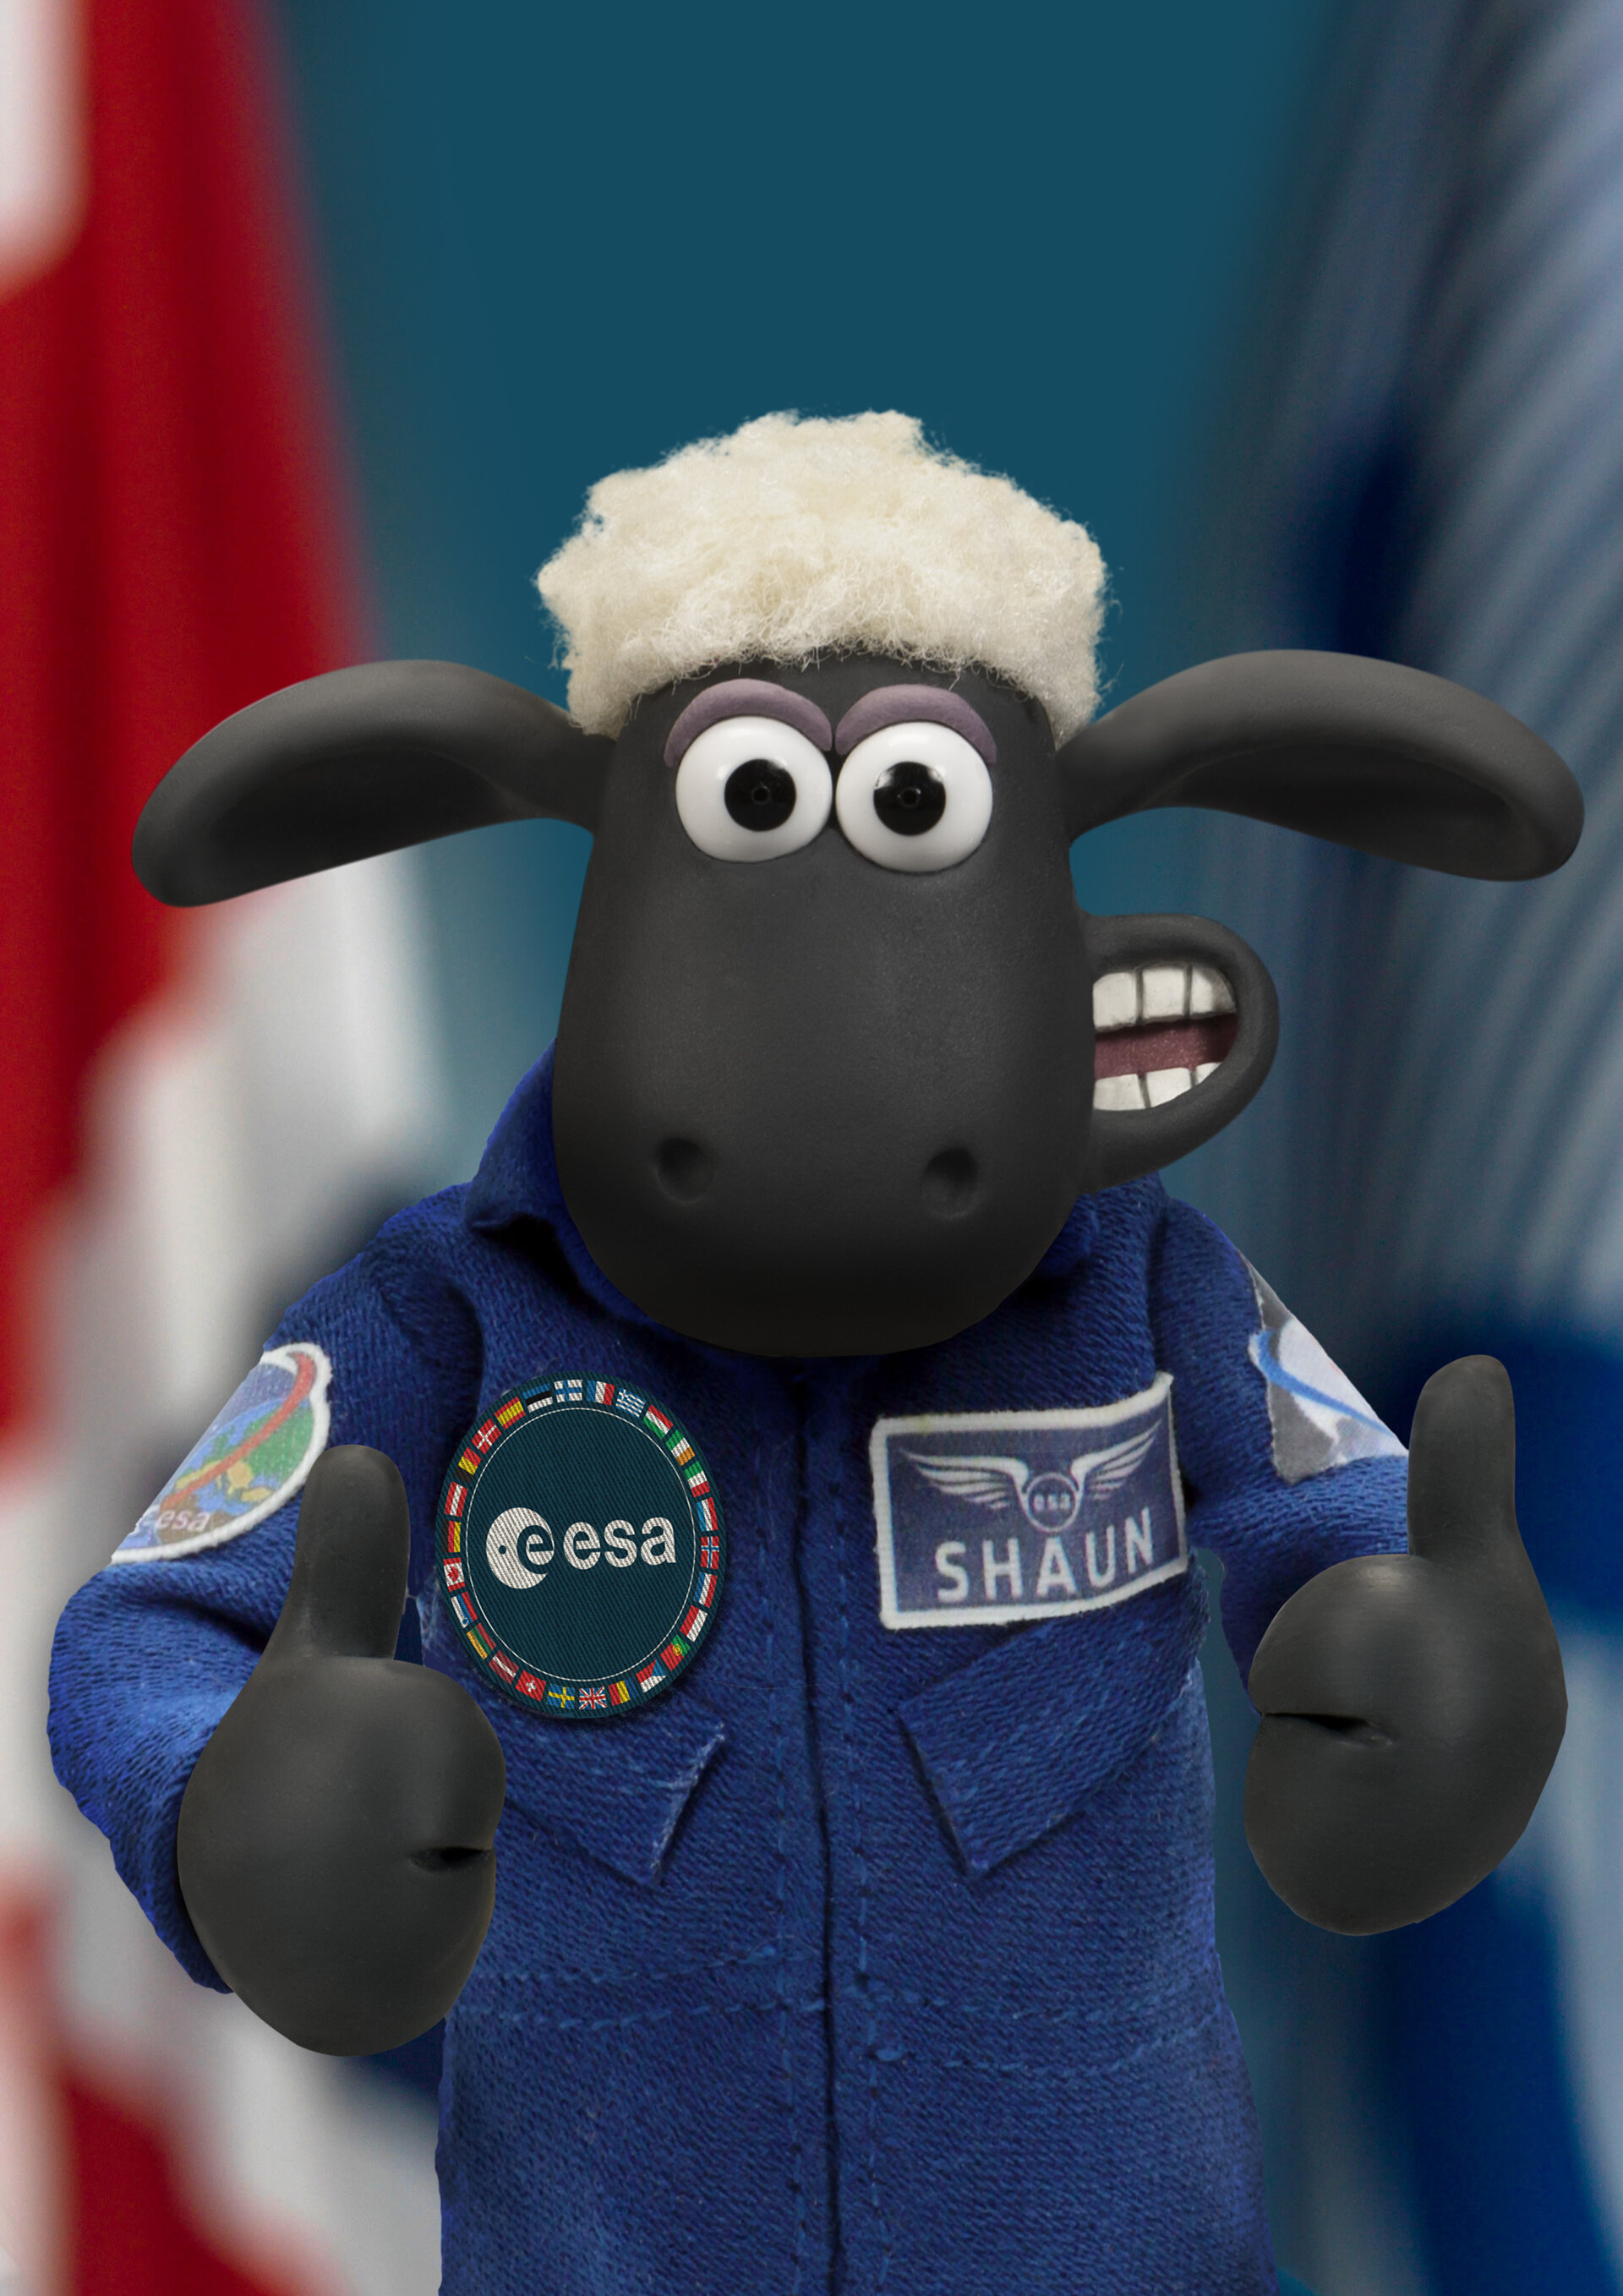 Shaun the Sheep astronaut portrait